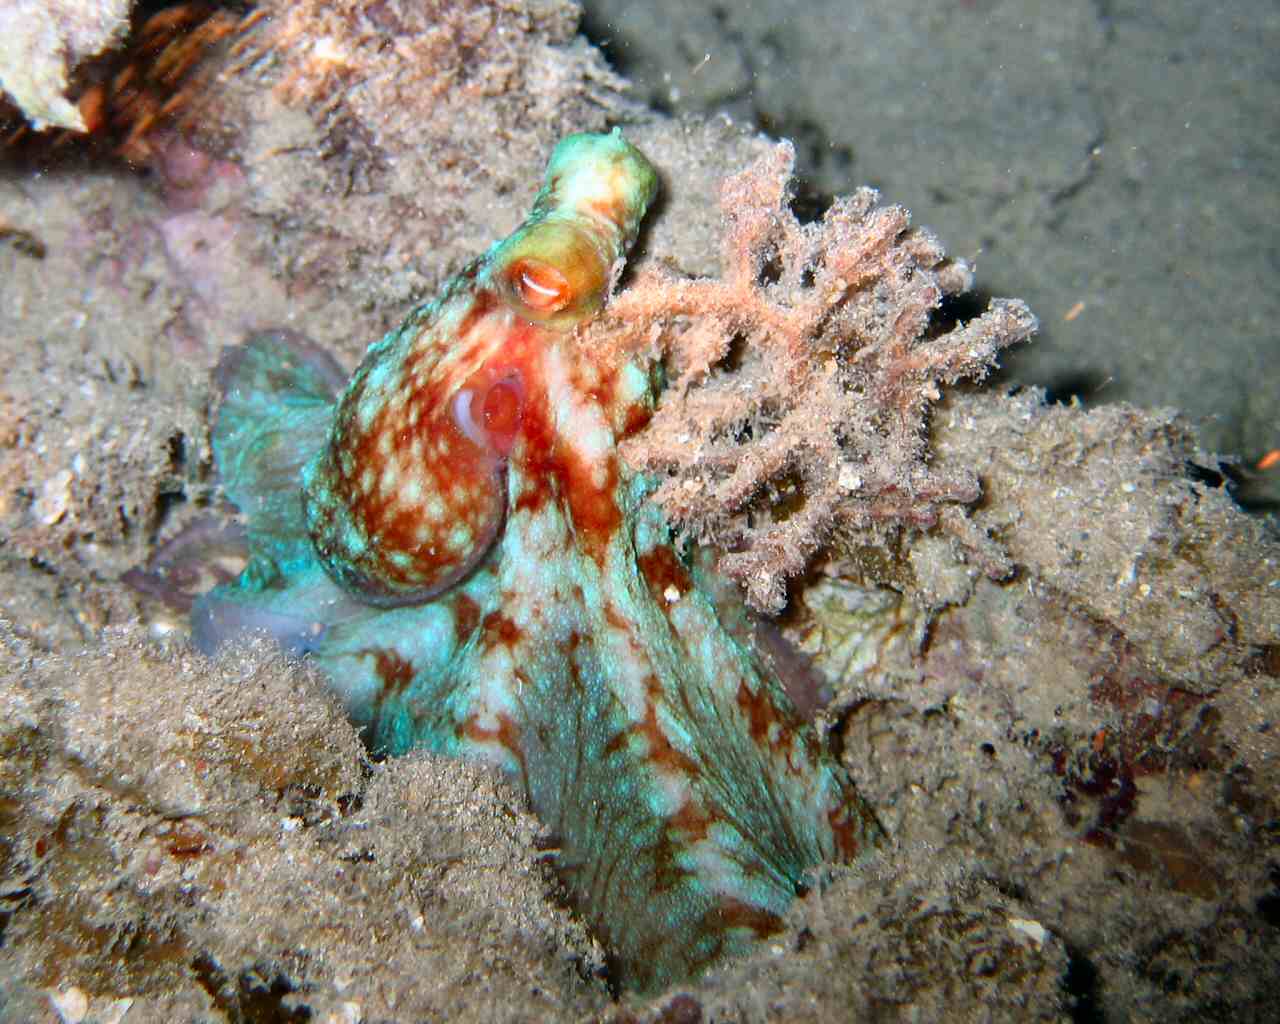 Octopus on the Prince Albert